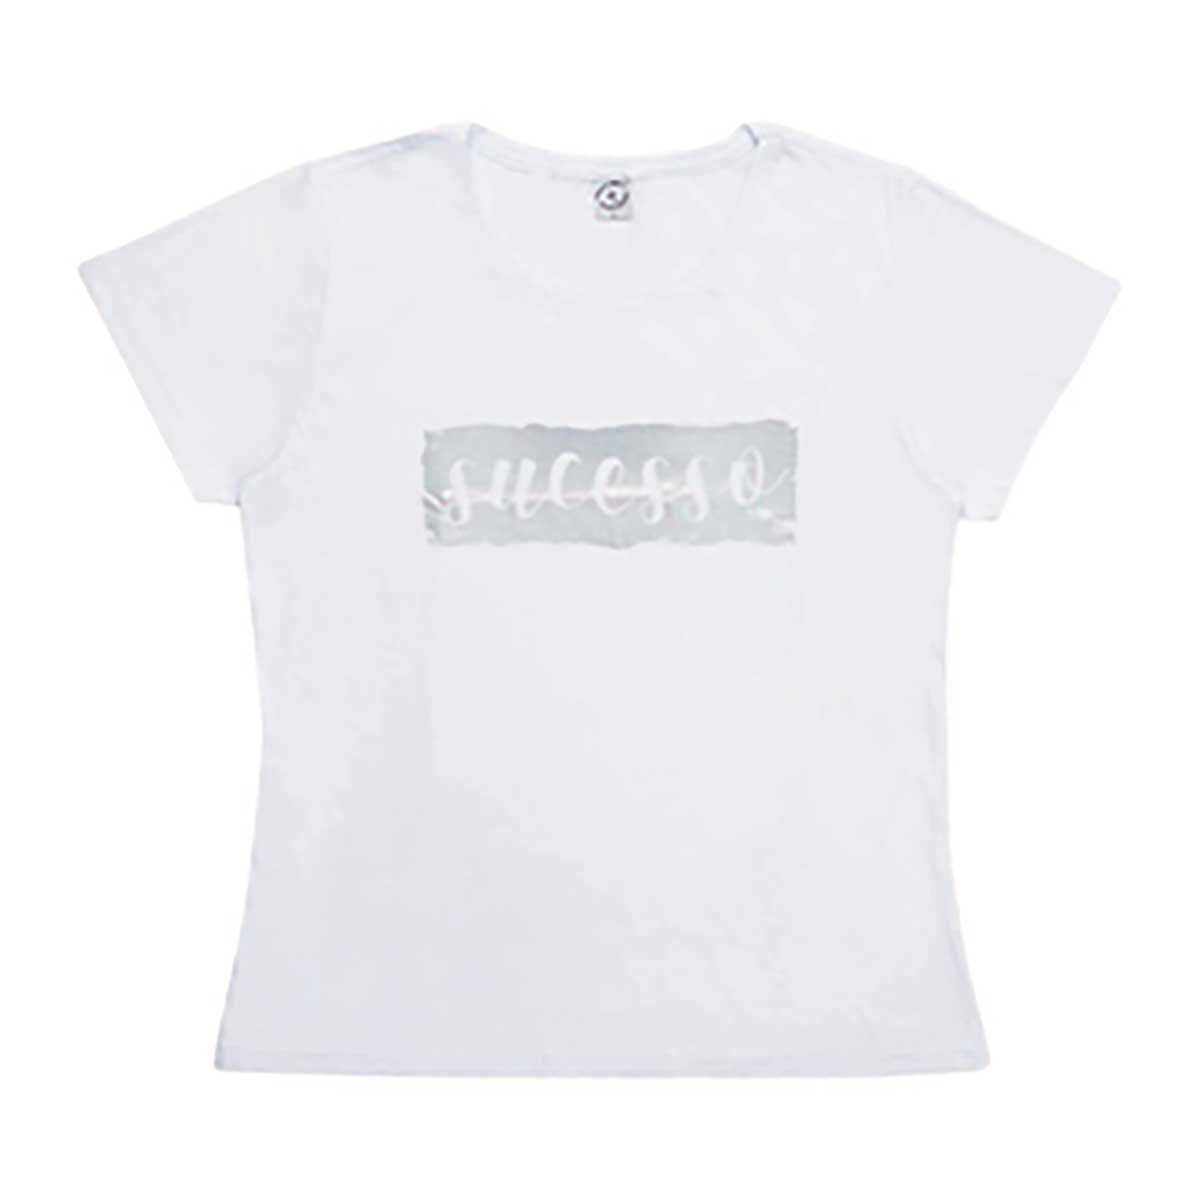 camiseta-feminina-branca-gg-uz3-1.jpg